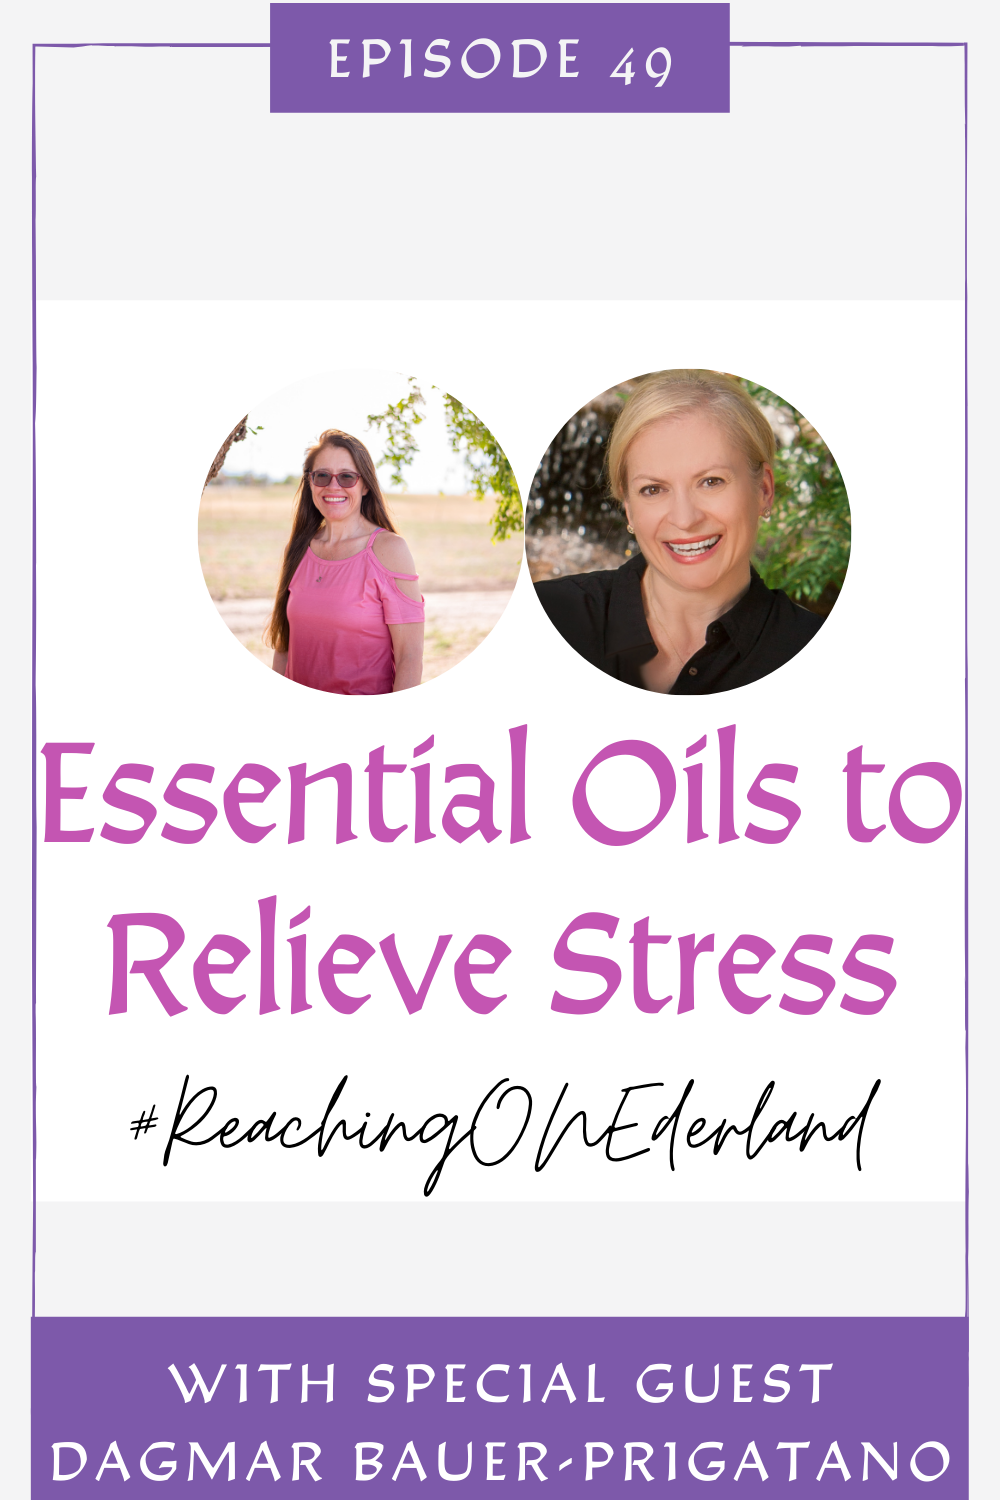 Essential Oils to Relieve Stress With Dagmar Bauer-Prigatano